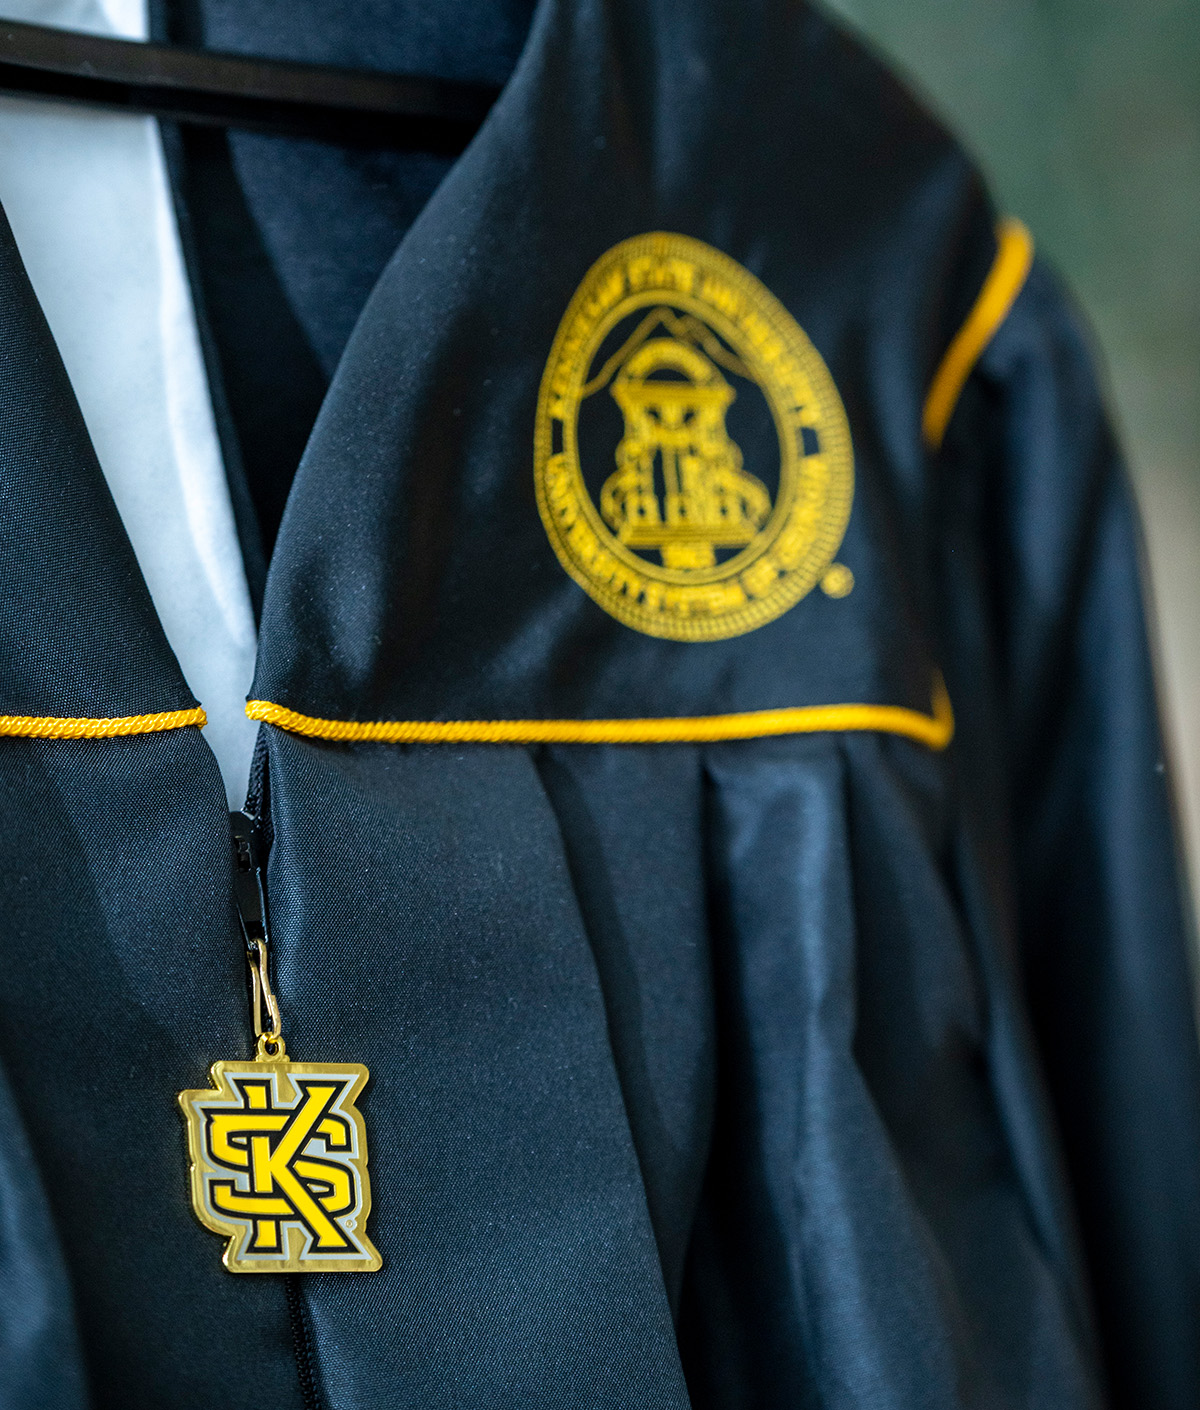 KSU Graduation Robe